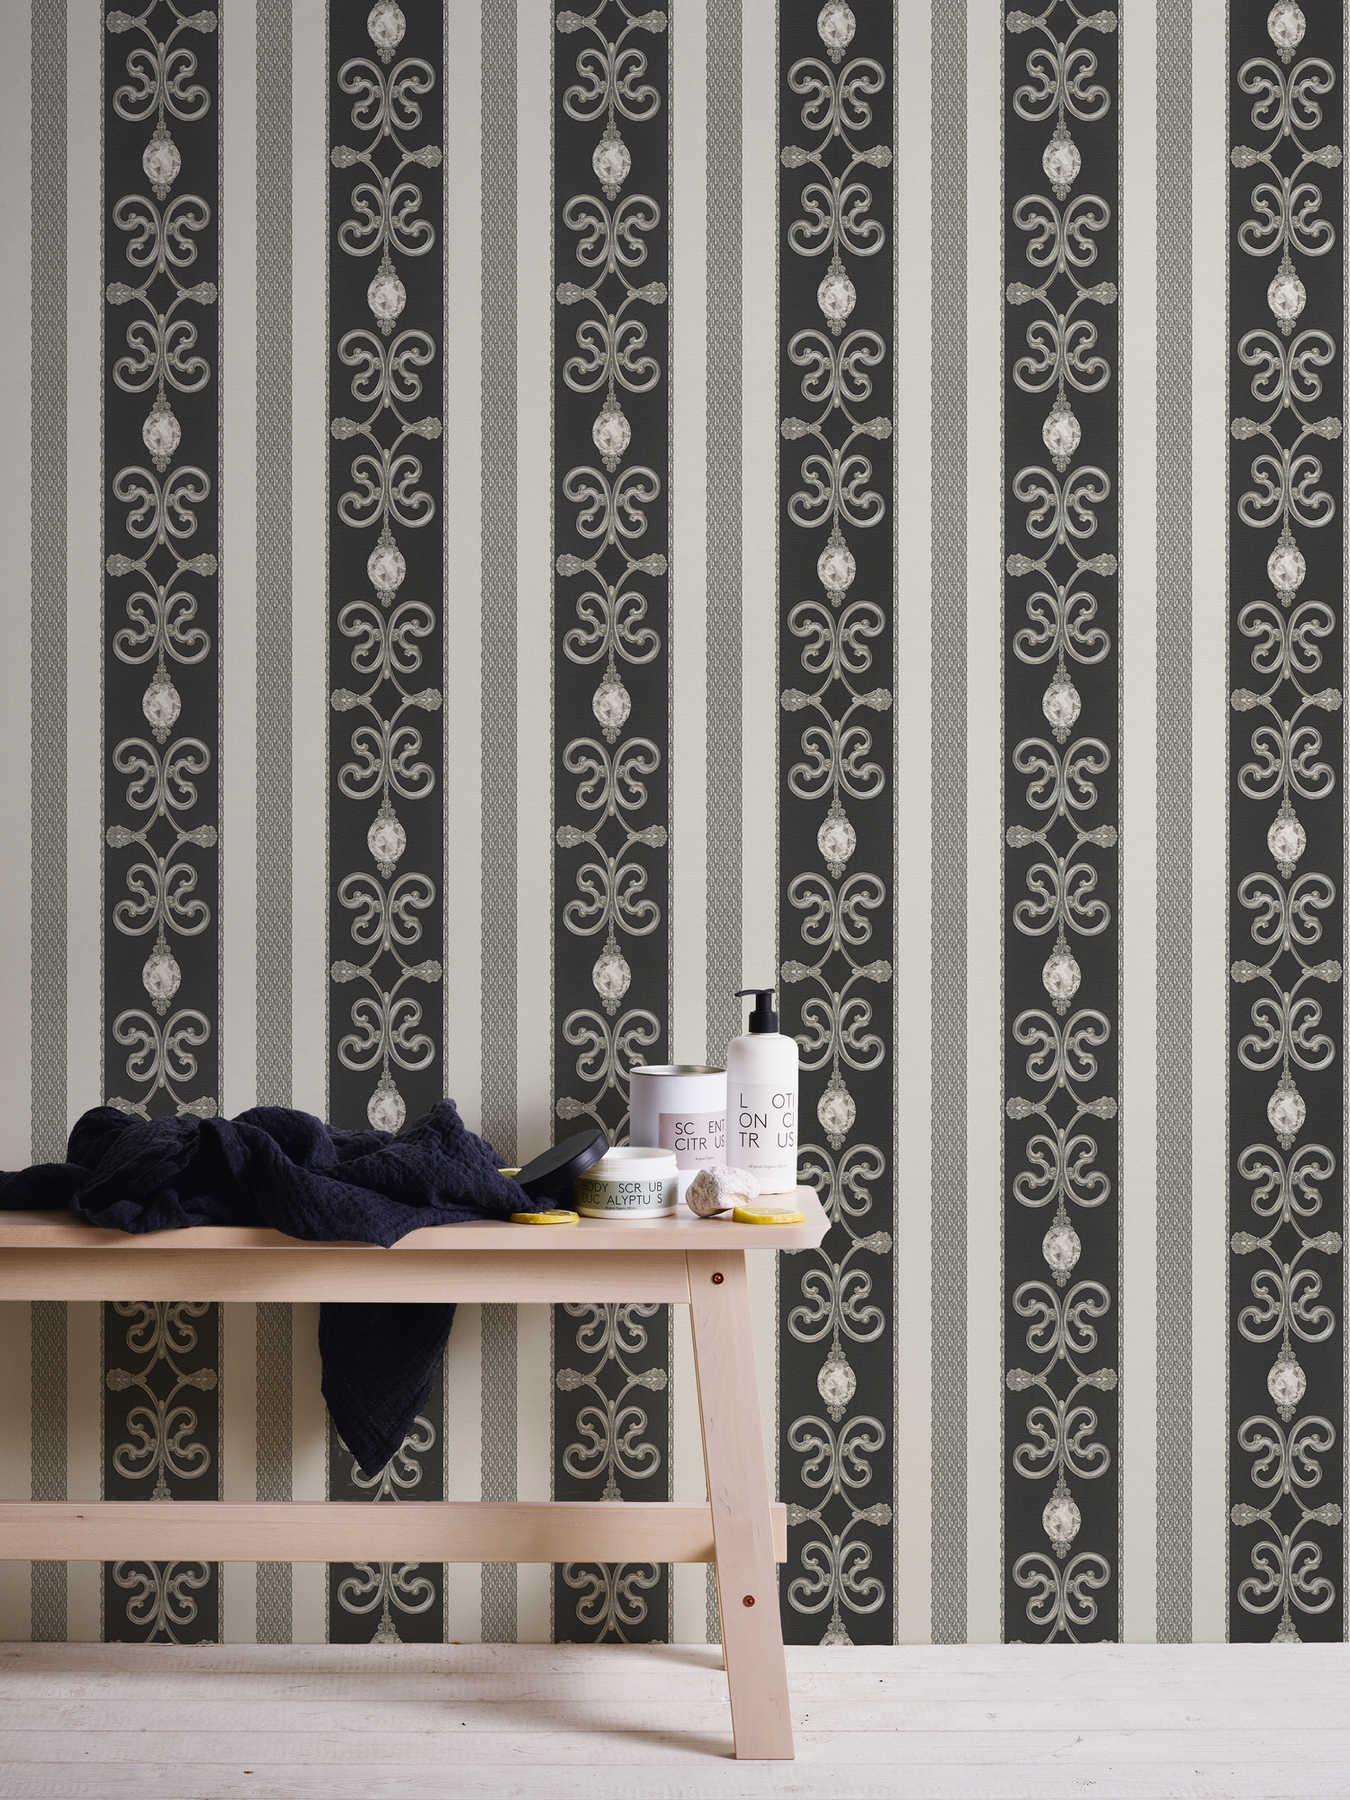             Luxury wallpaper with metallic stripes & ornaments - black
        